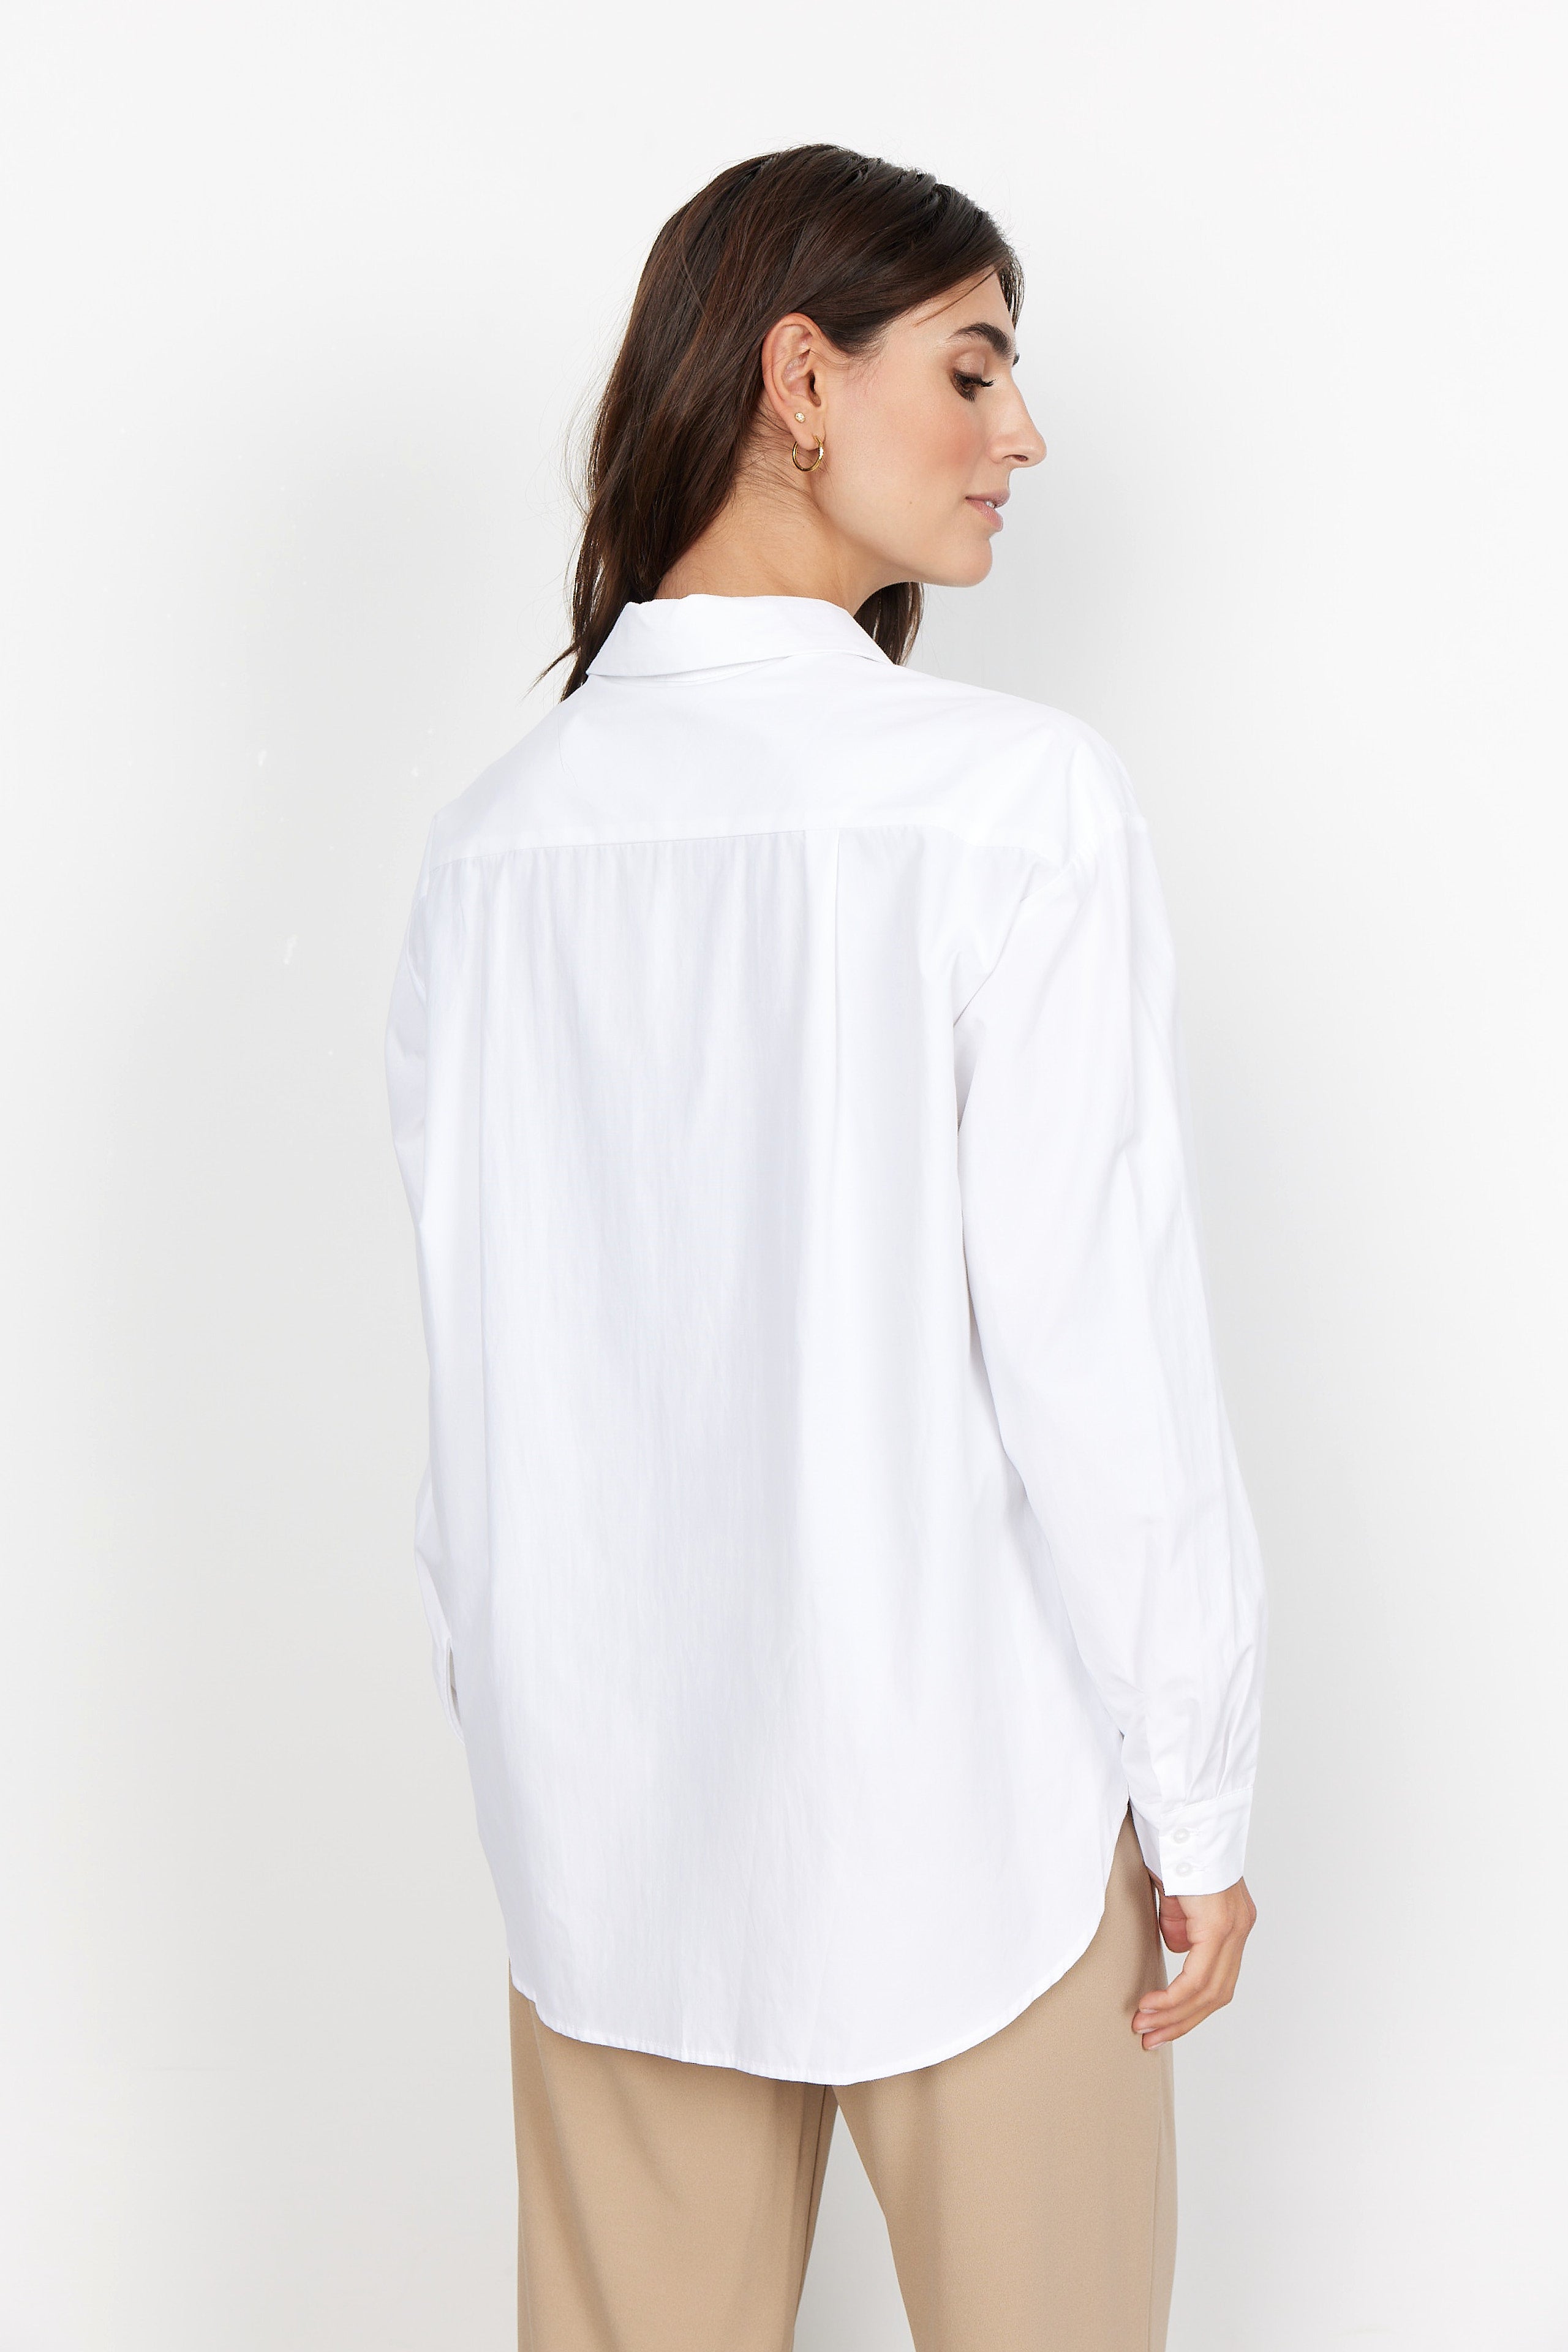 Soya Concept Netti37 Shirt (White)